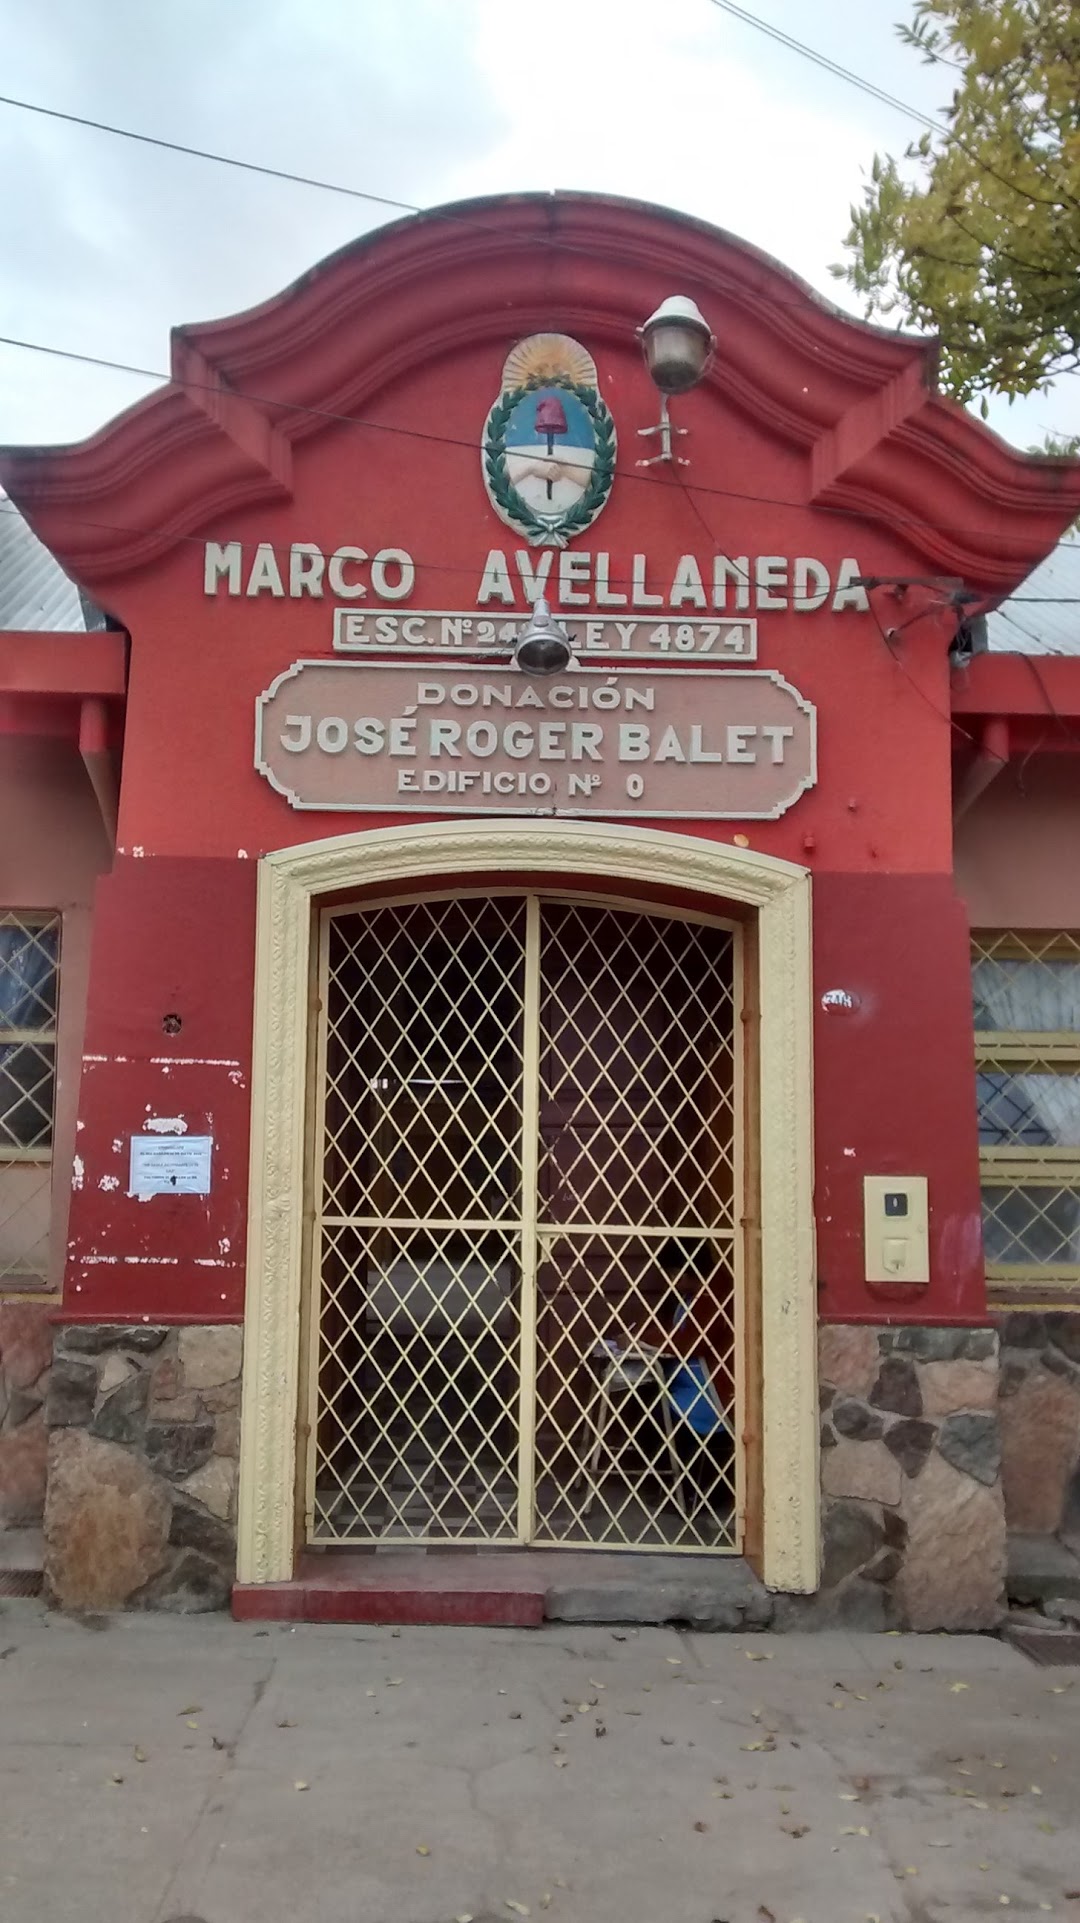 Escuela N249 Marco Avellaneda